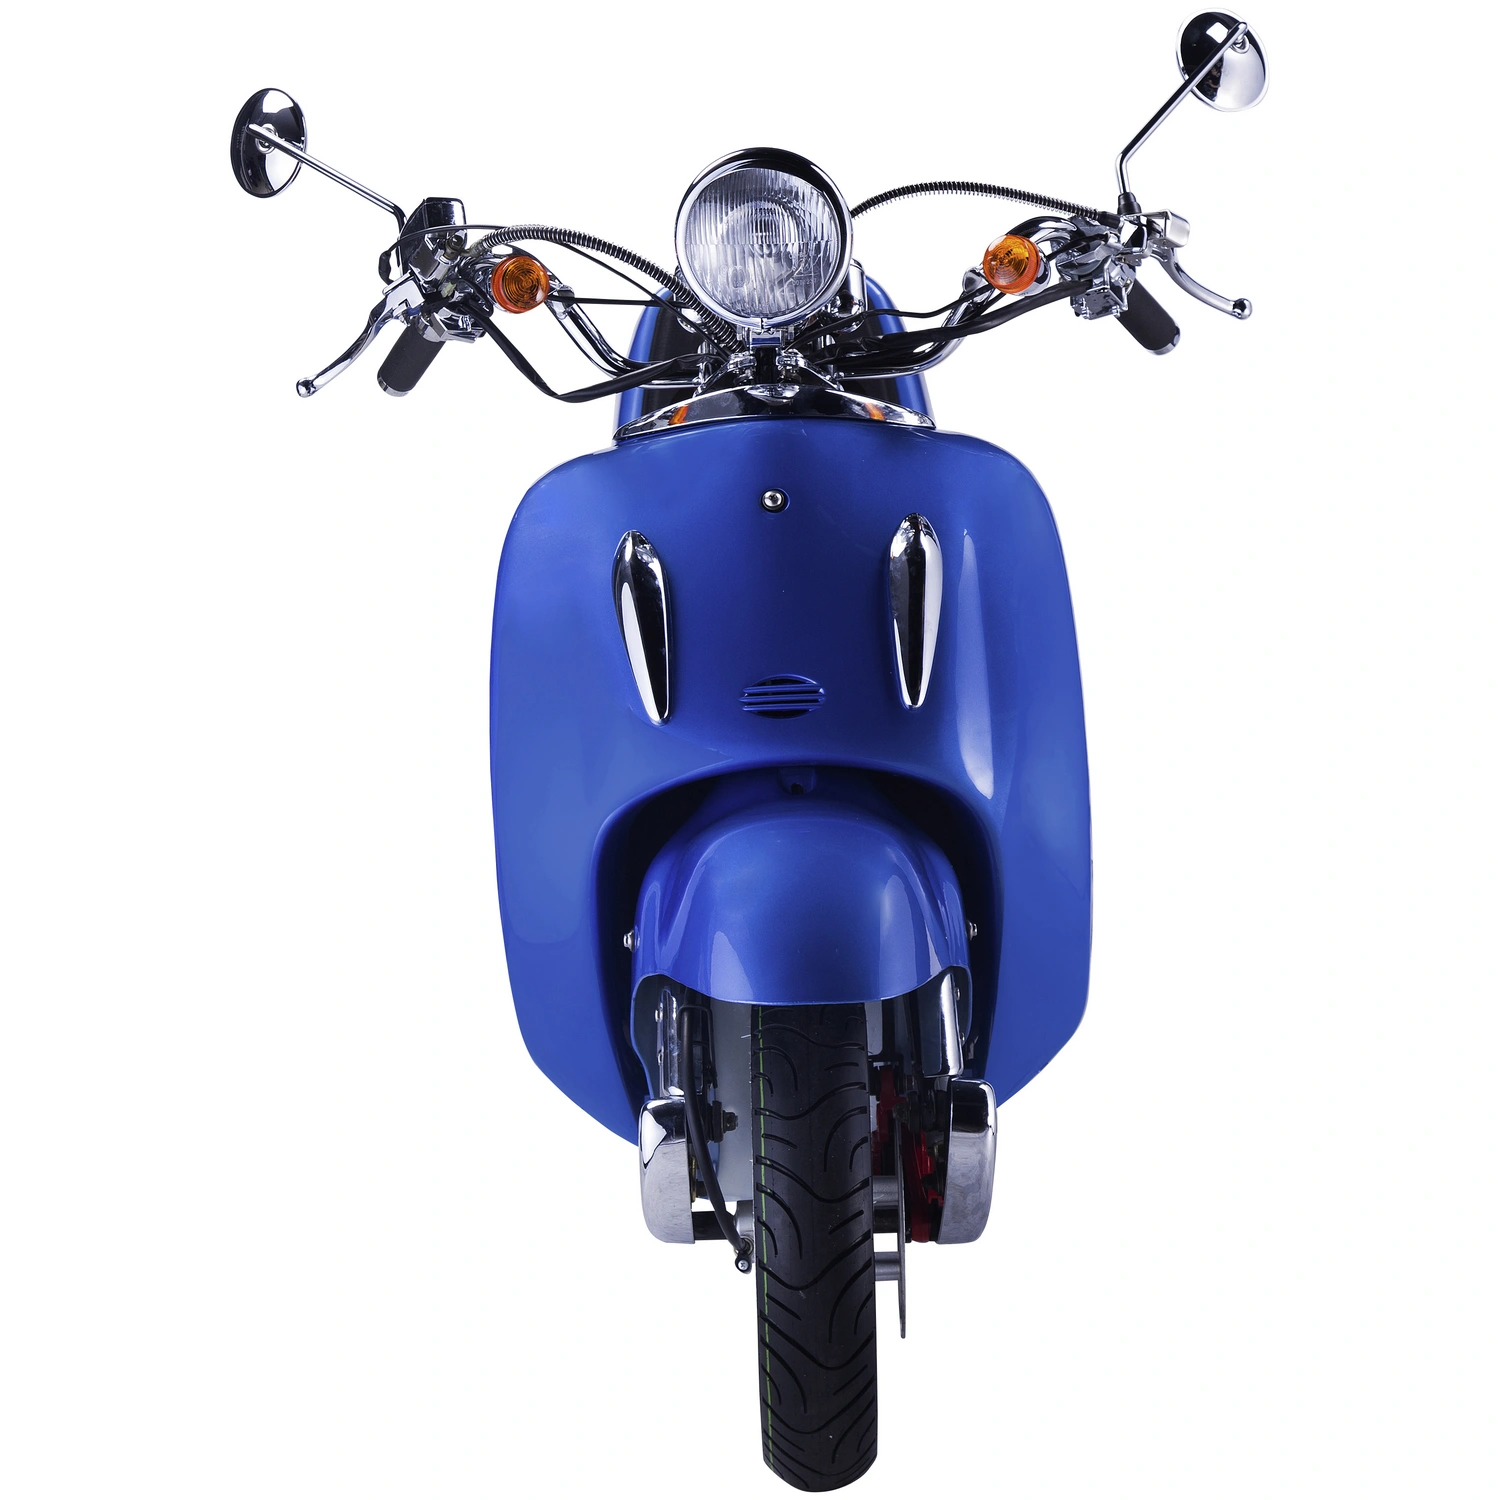 GT UNION Motorroller »Strada«, Euro 45 5 km/h, 50 cm³